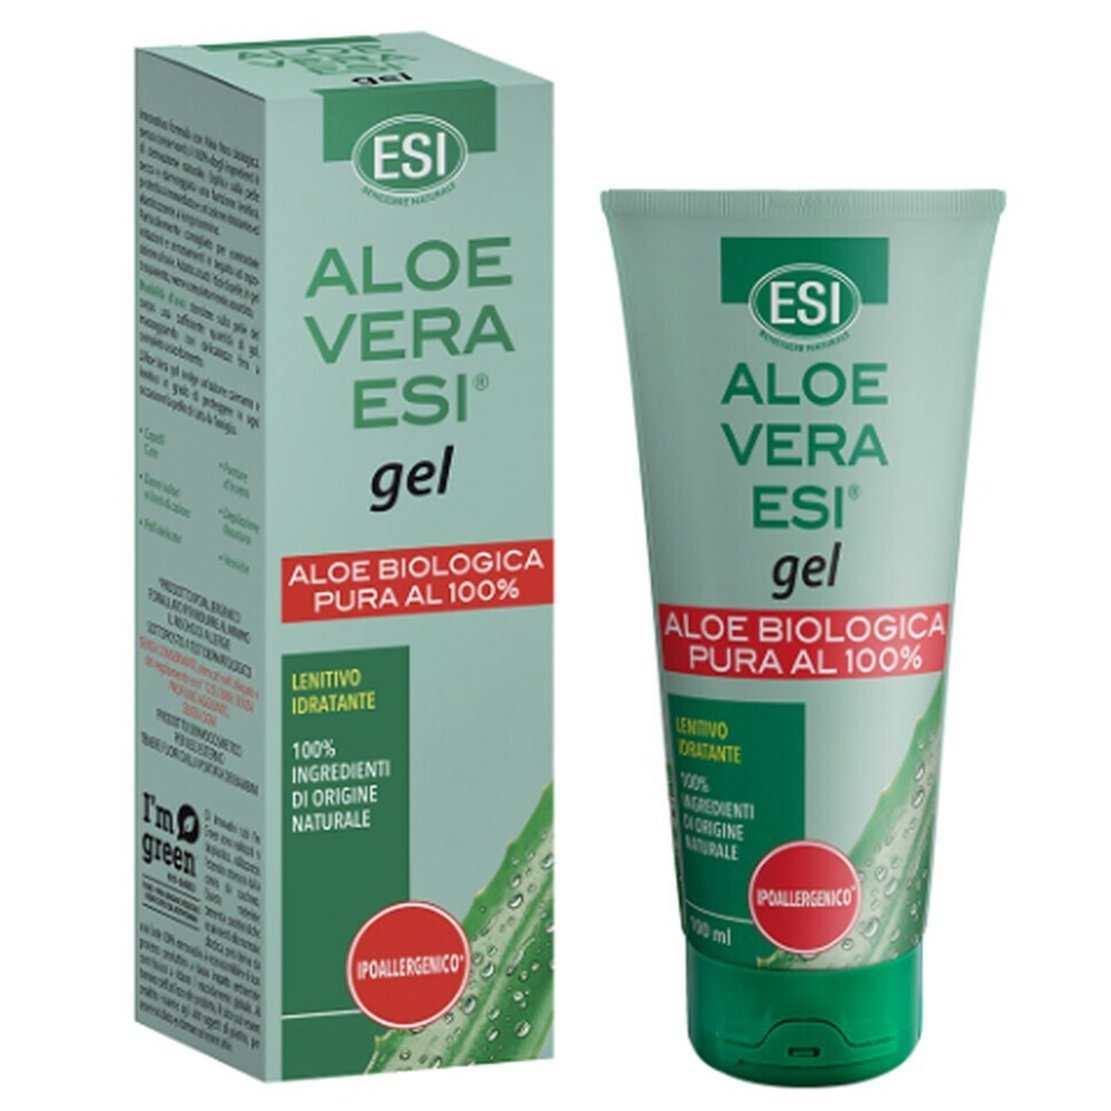 Karabinis Medical Esi Aloe Vera Gel 100% Pure Soothing Moisturizing Ενυδατικό Gel με Βιολογική Αλόη για Προστασία & Ανάπλαση της Επιδερμίδας 200ml